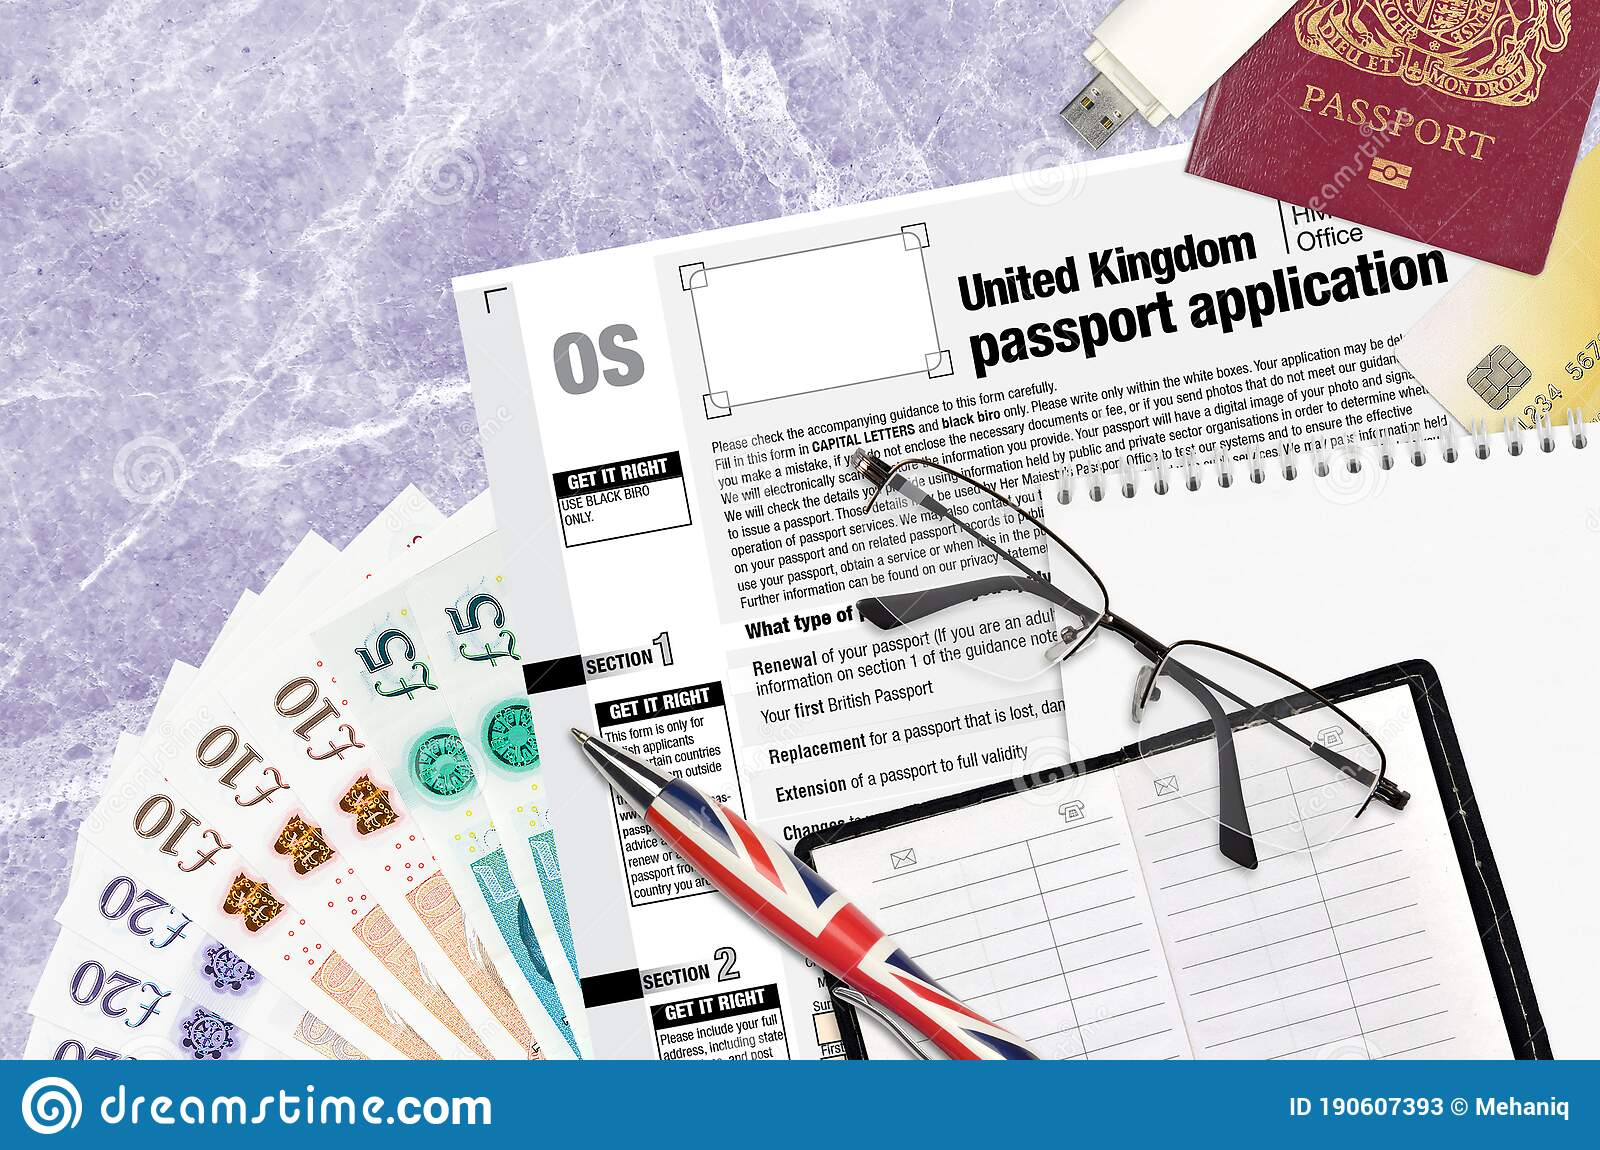 English Form OS United Kingdom Passport Application From HM Passport 